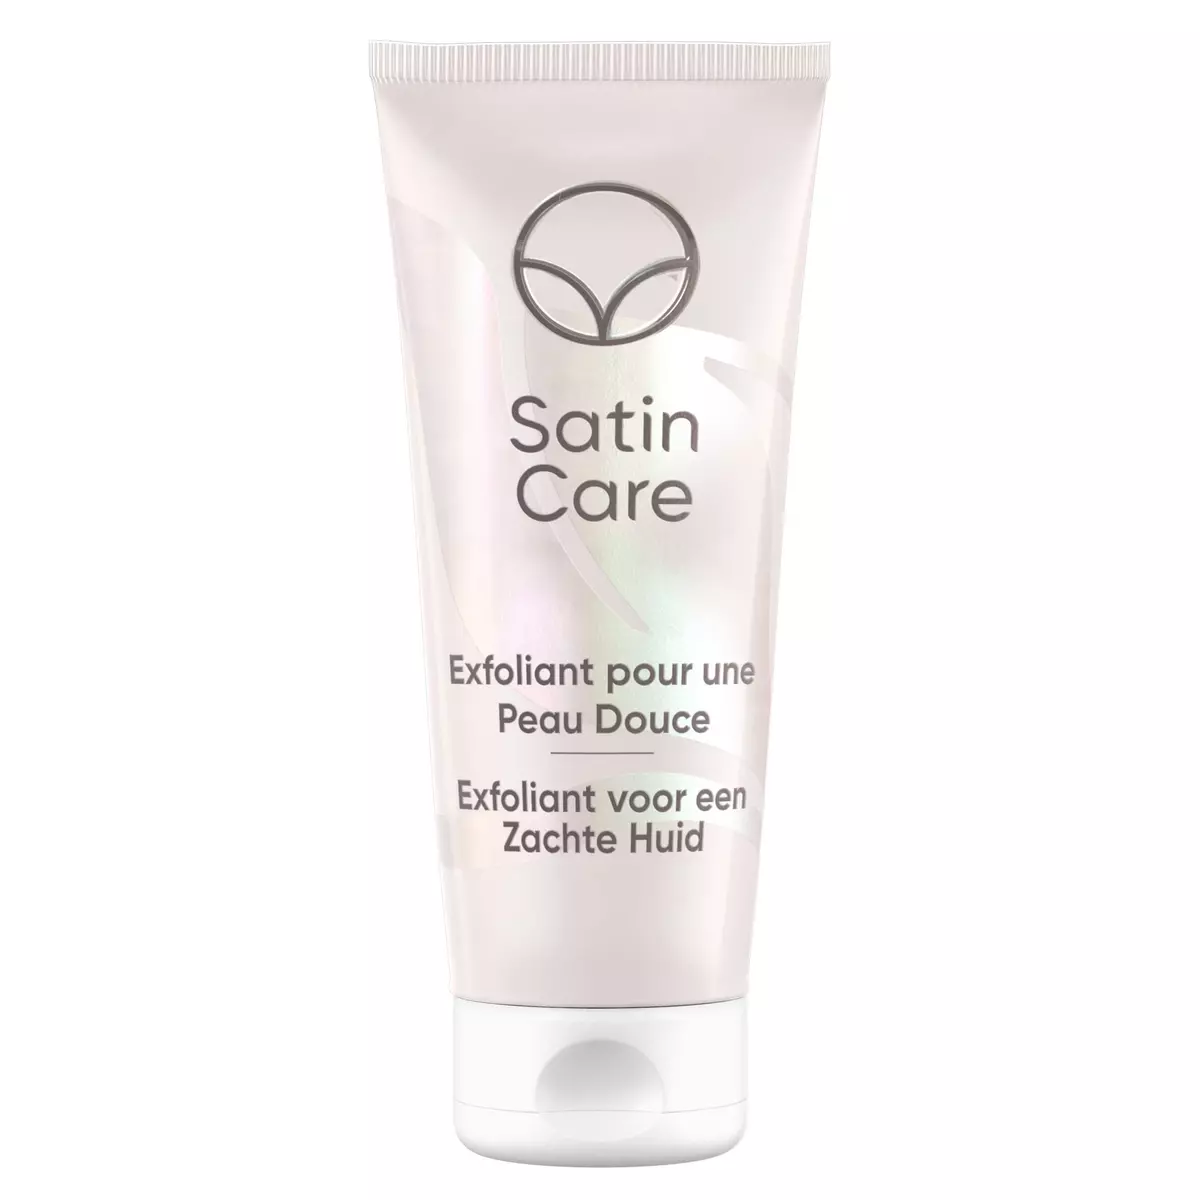 VENUS Satin Care Skin Care Exfoliant pour une peau douce 177ml